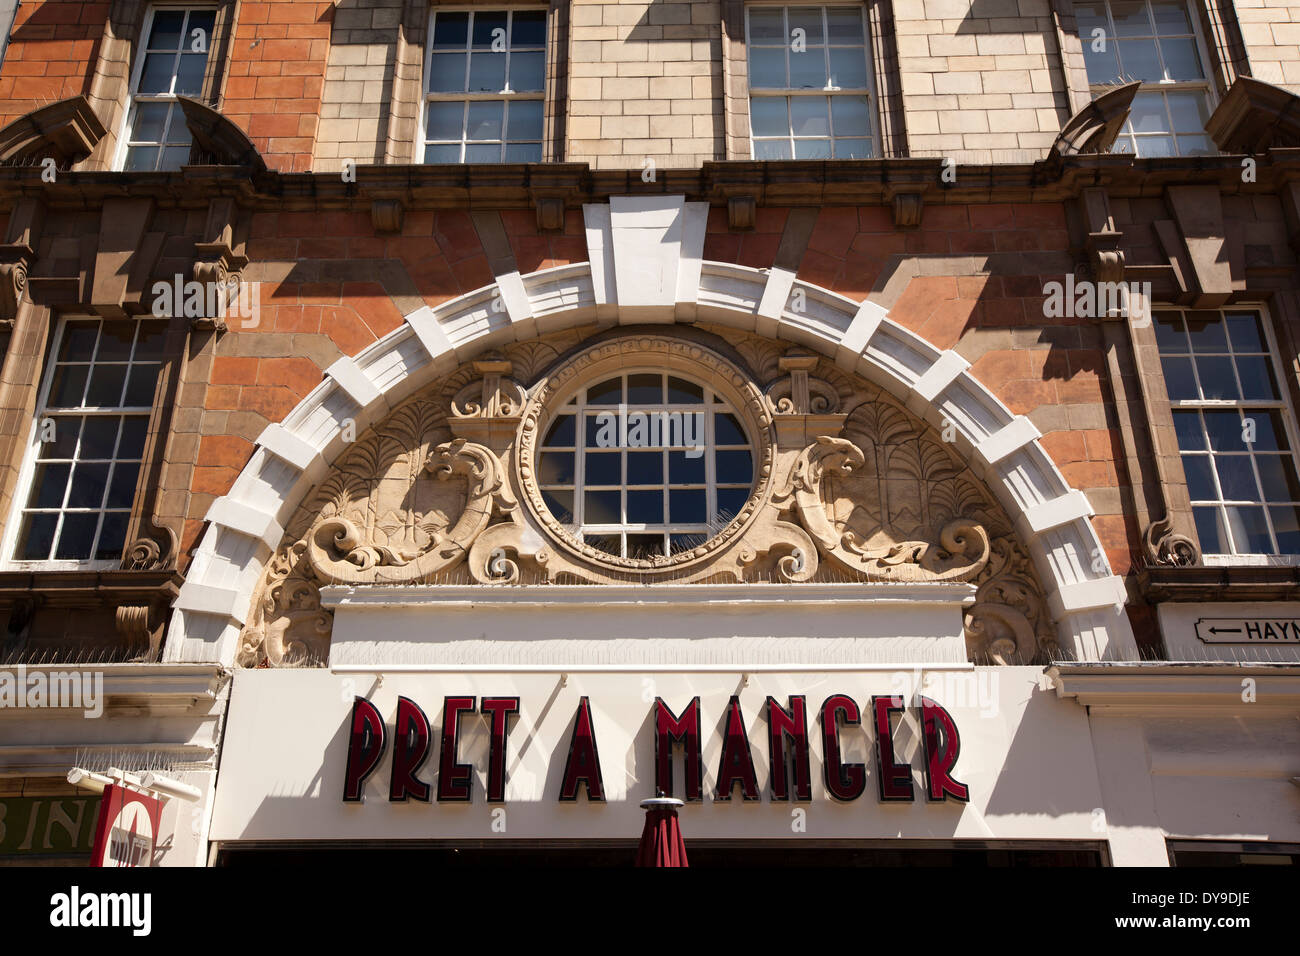 UK, England, Norfolk, Norwich, Gentlemans Walk, Pret a Manger sign on Edwardian building Stock Photo